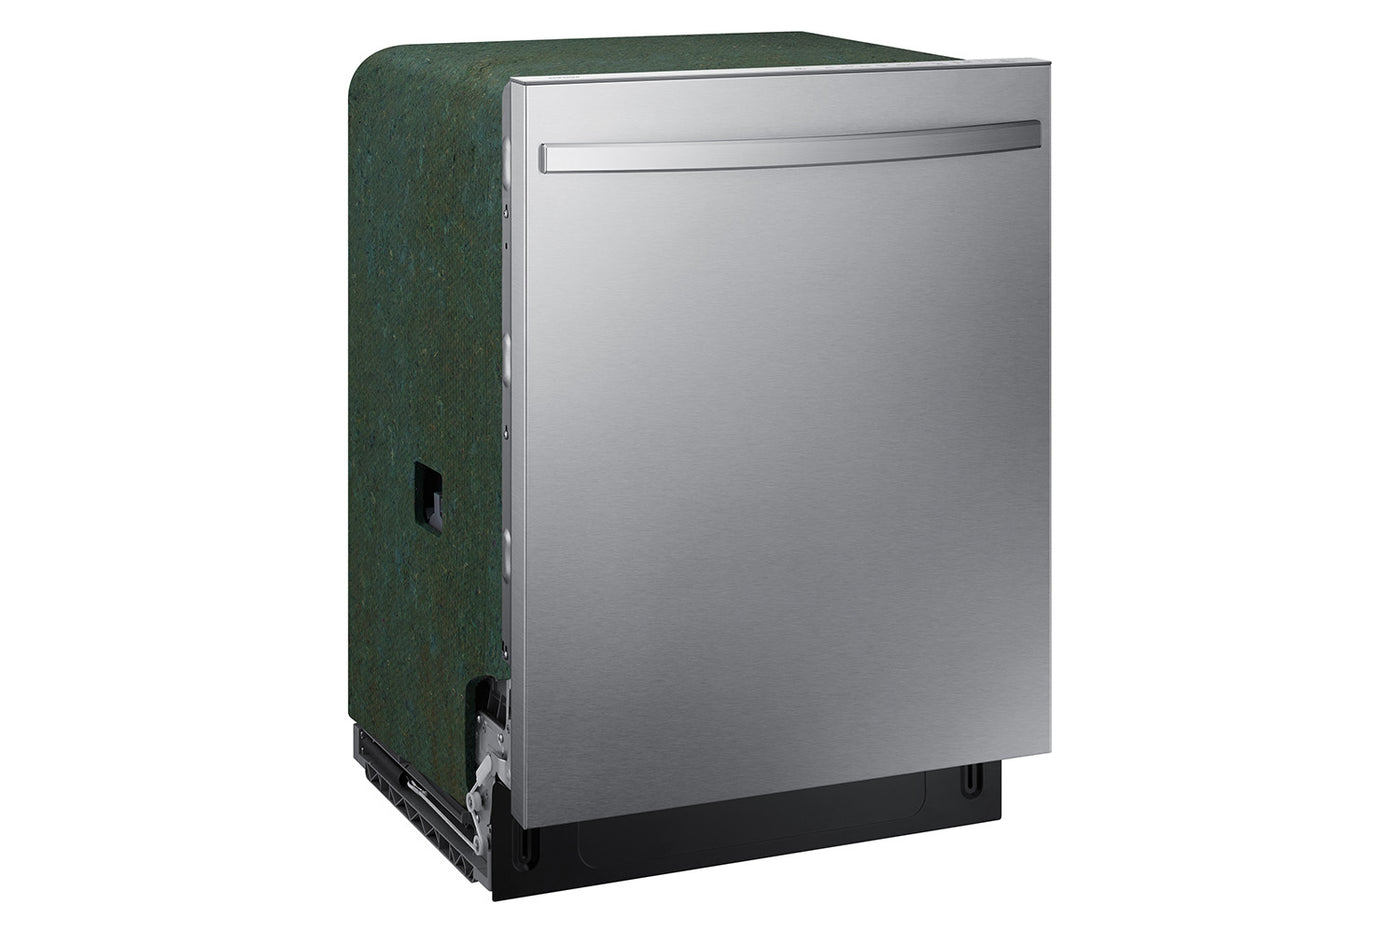 Samsung Stainless Steel 3rd Rack Dishwasher - DW80CG4051SRAA